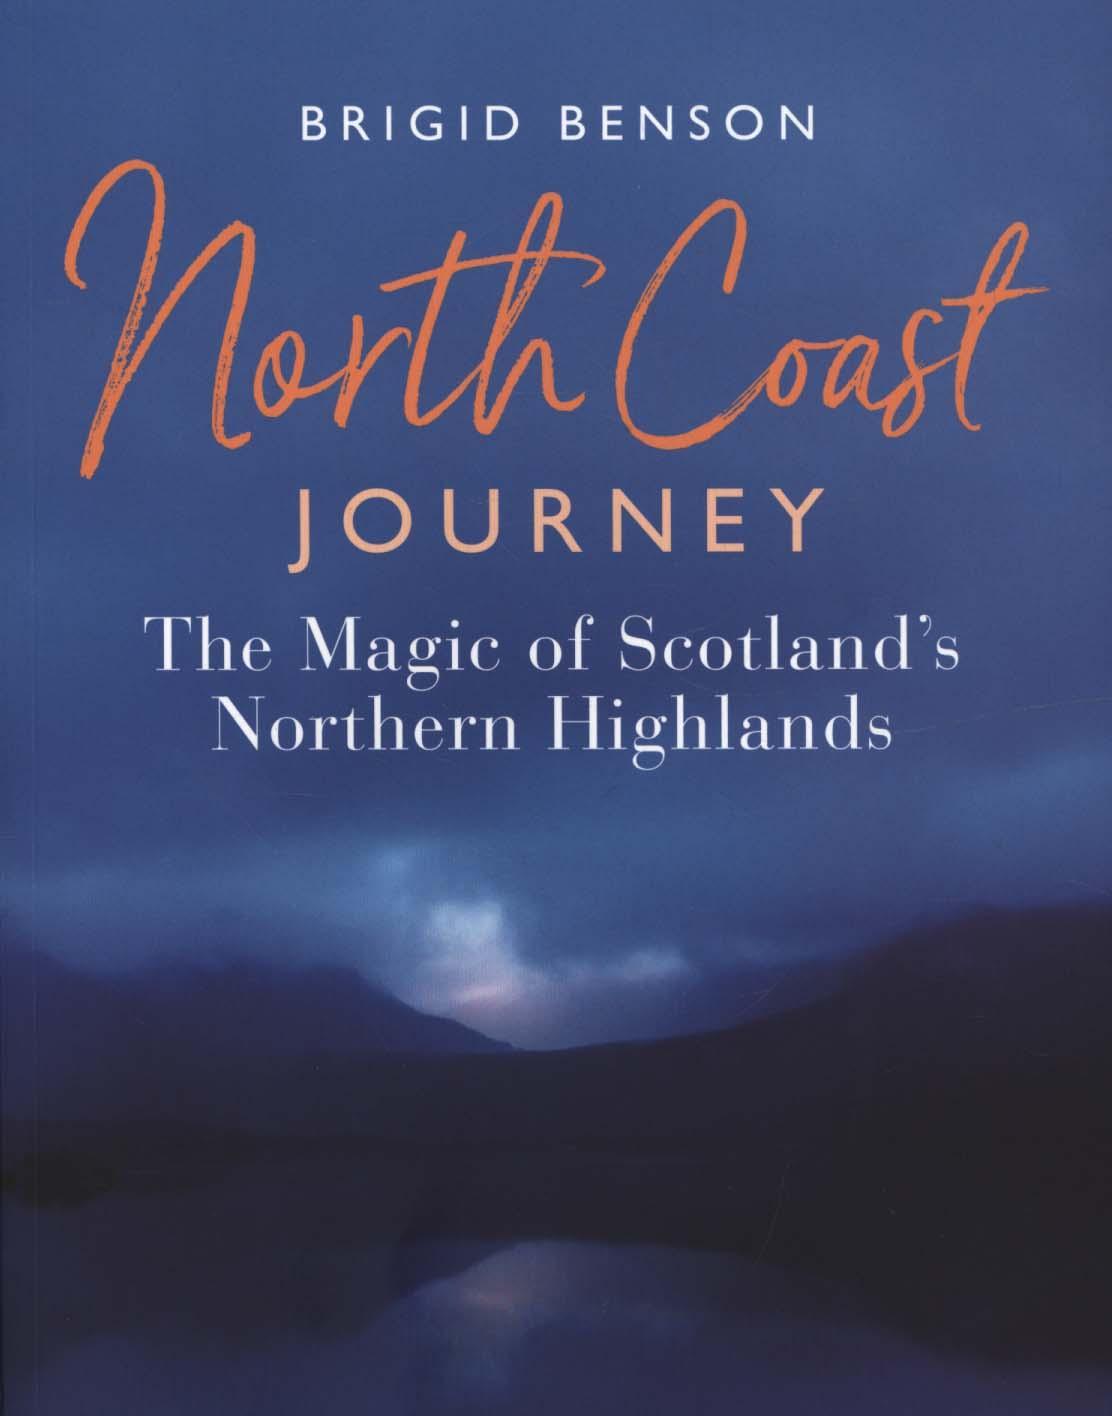 North Coast Journey - Brigid Benson